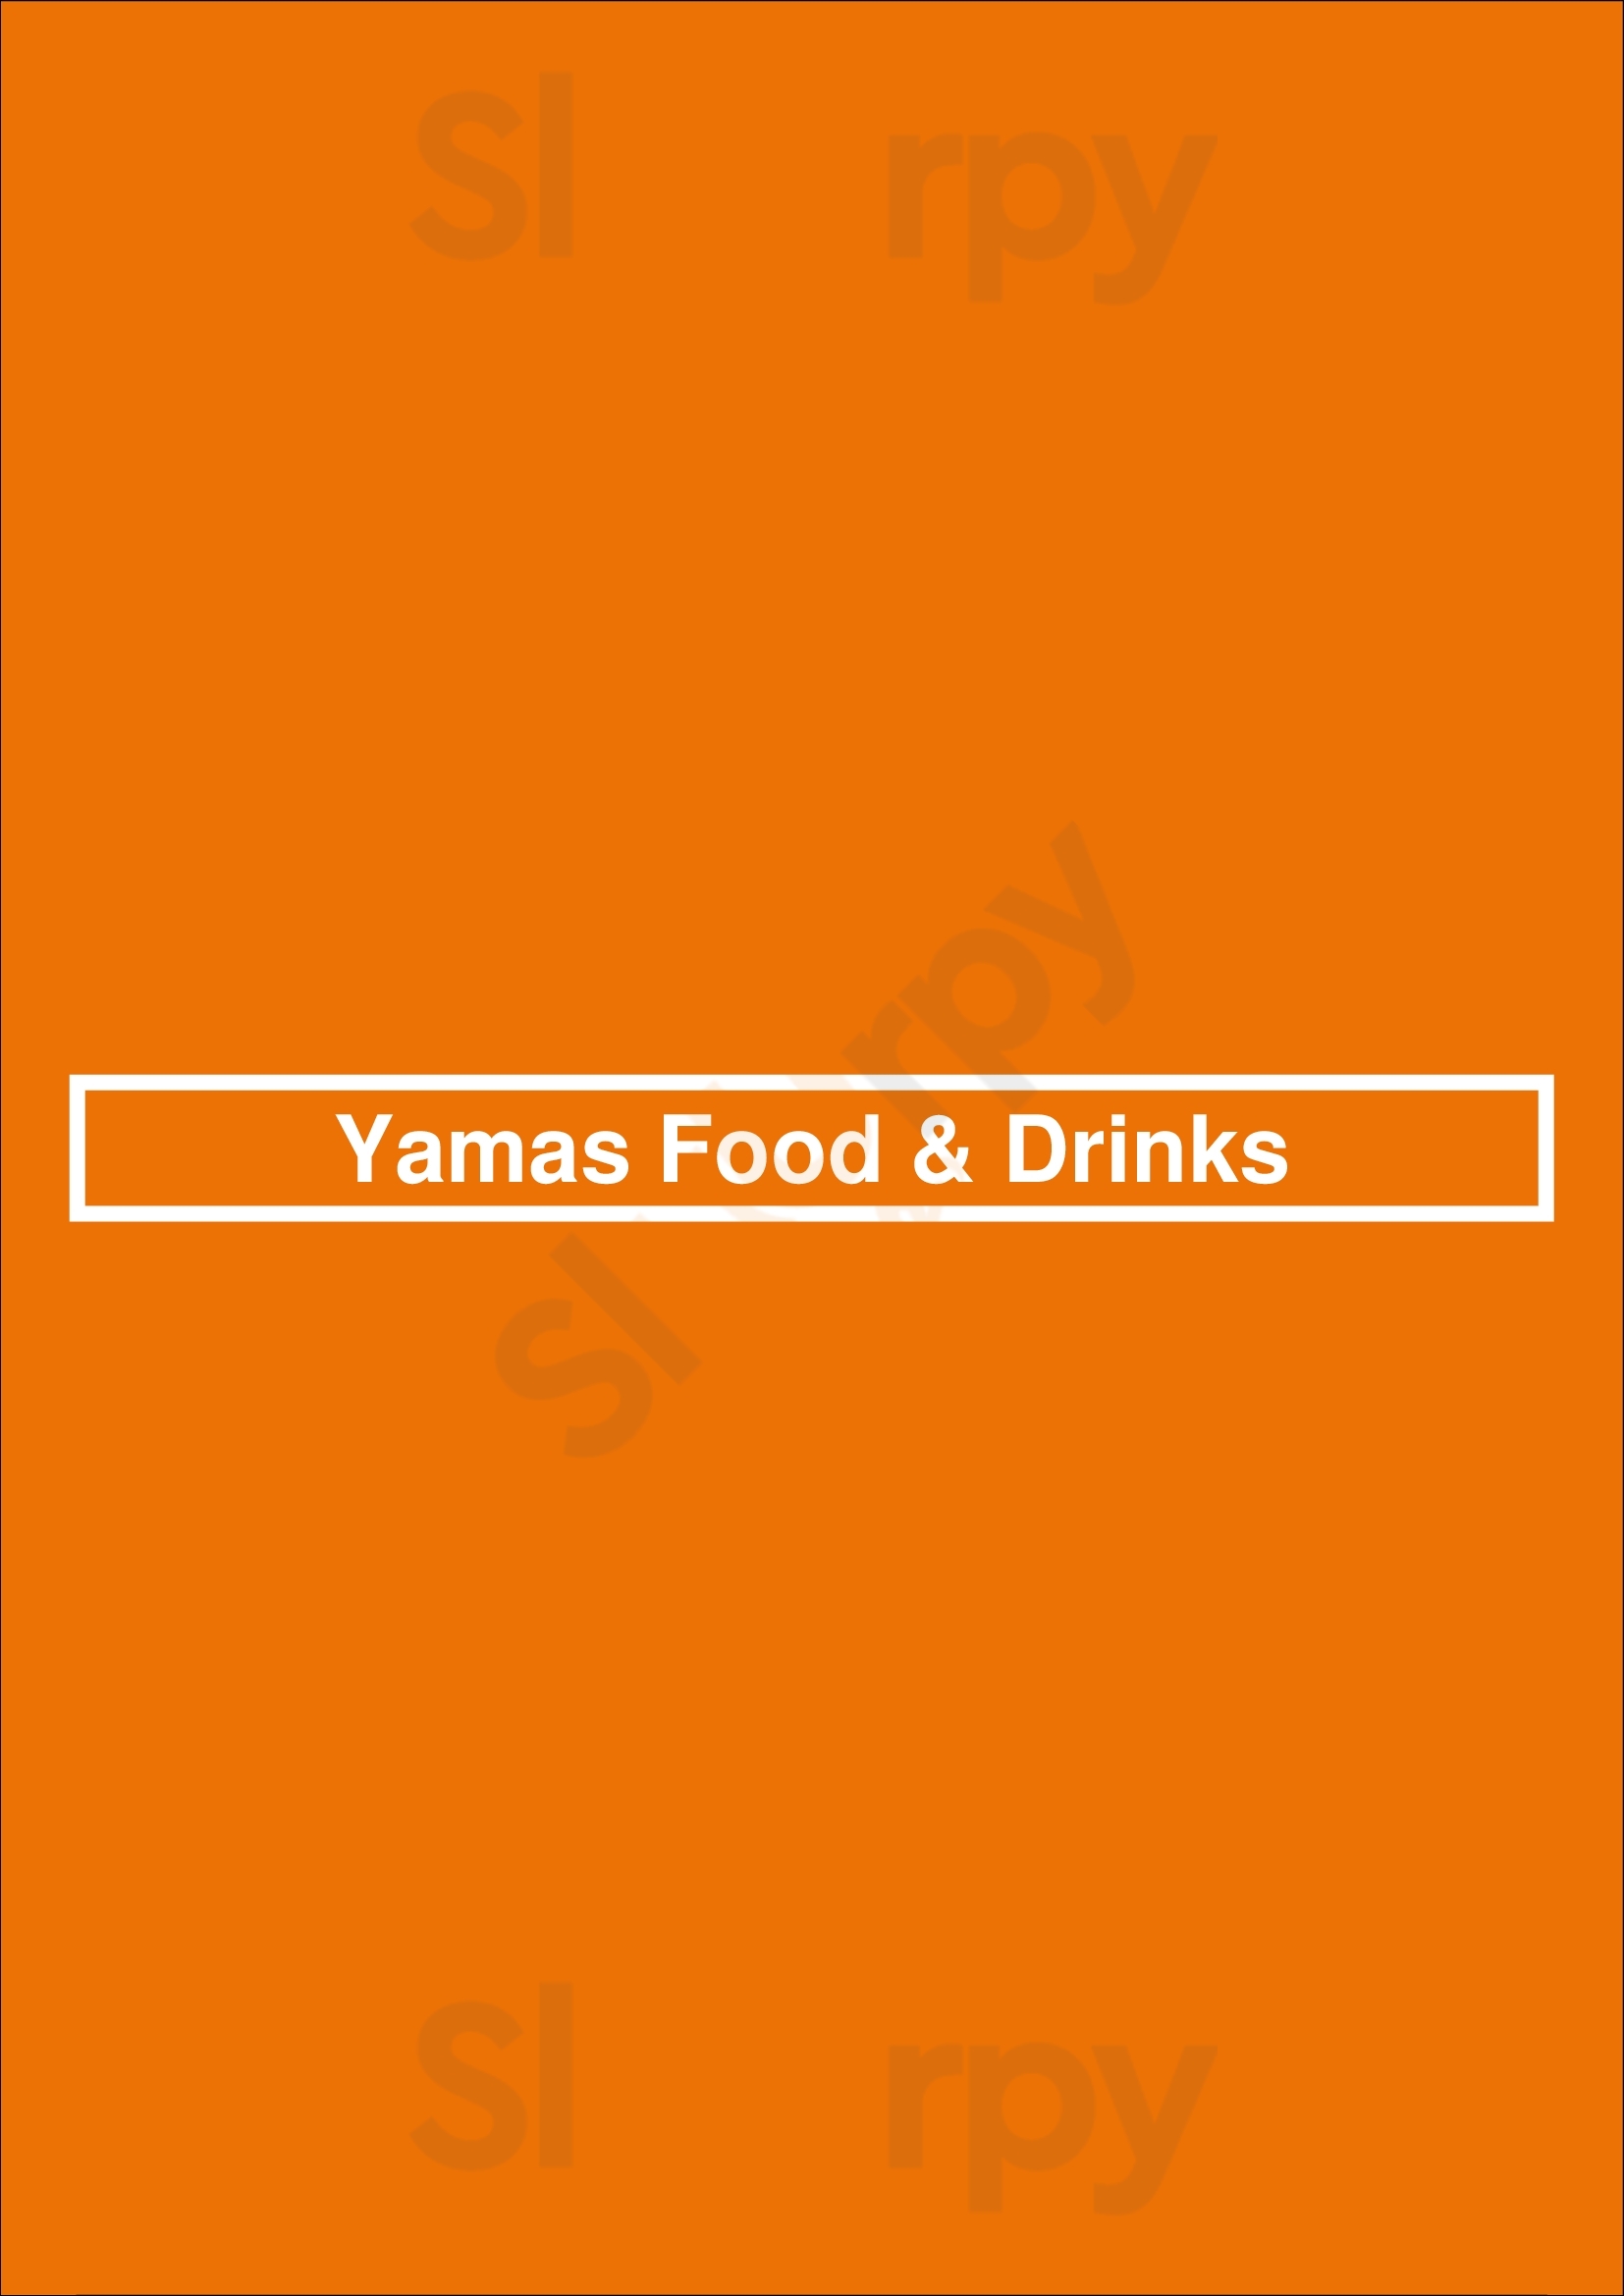 Yamas Food & Drinks Almere Menu - 1